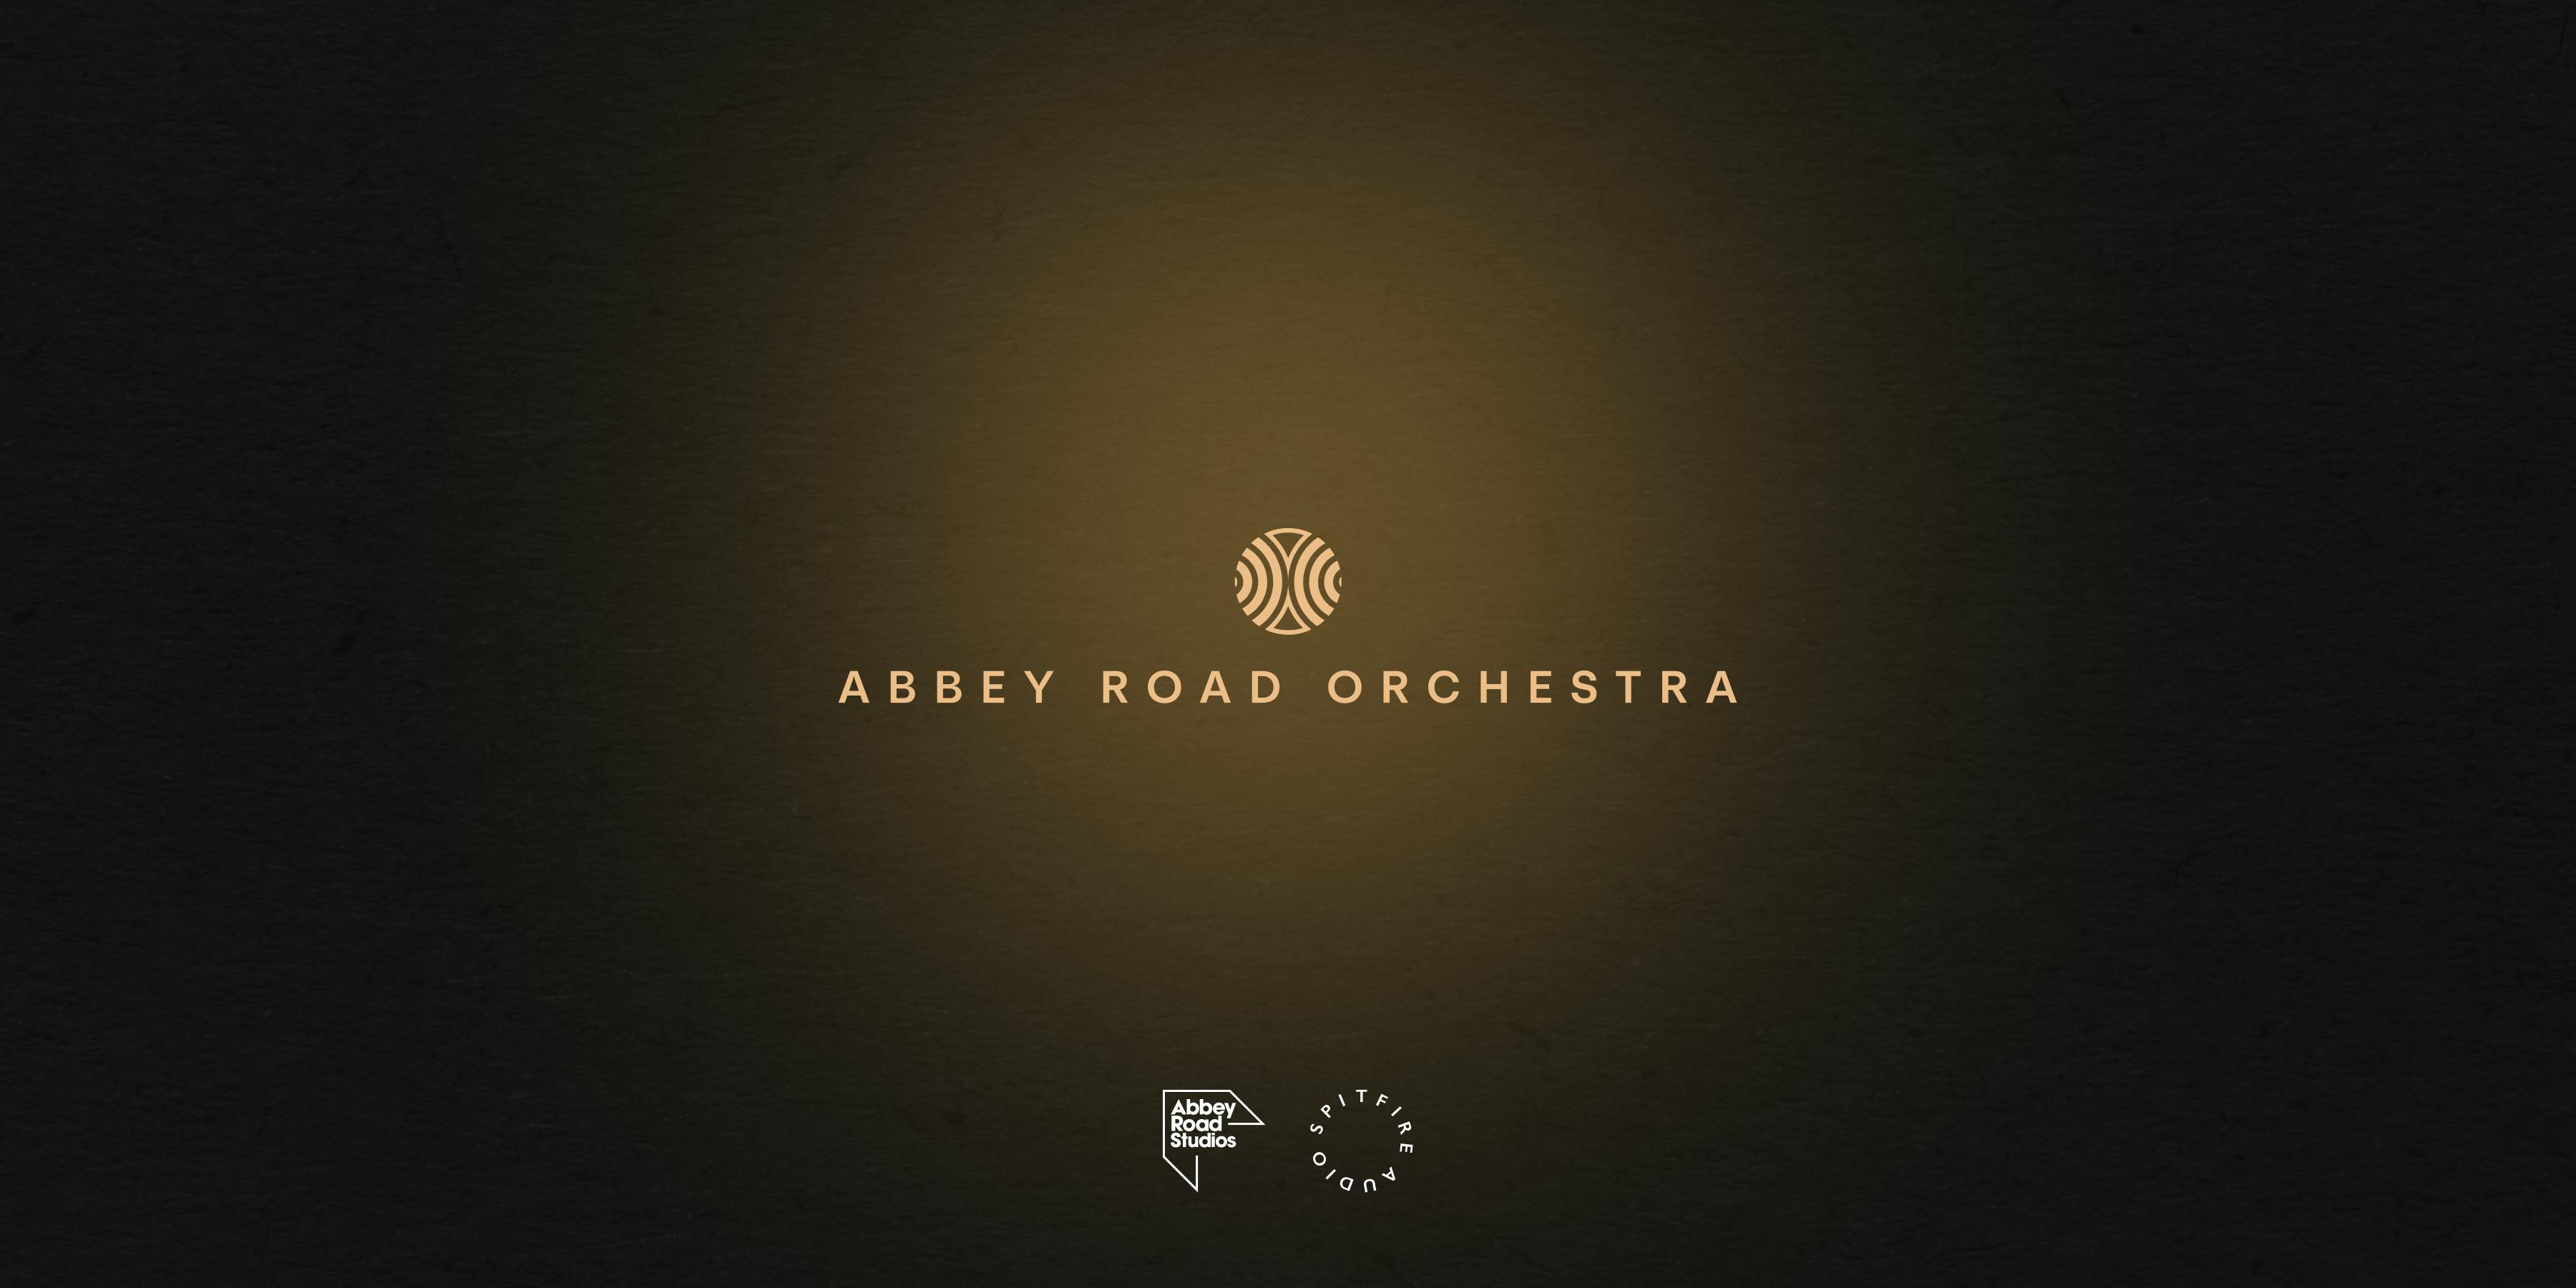 Abbey Road Orchestra artwork